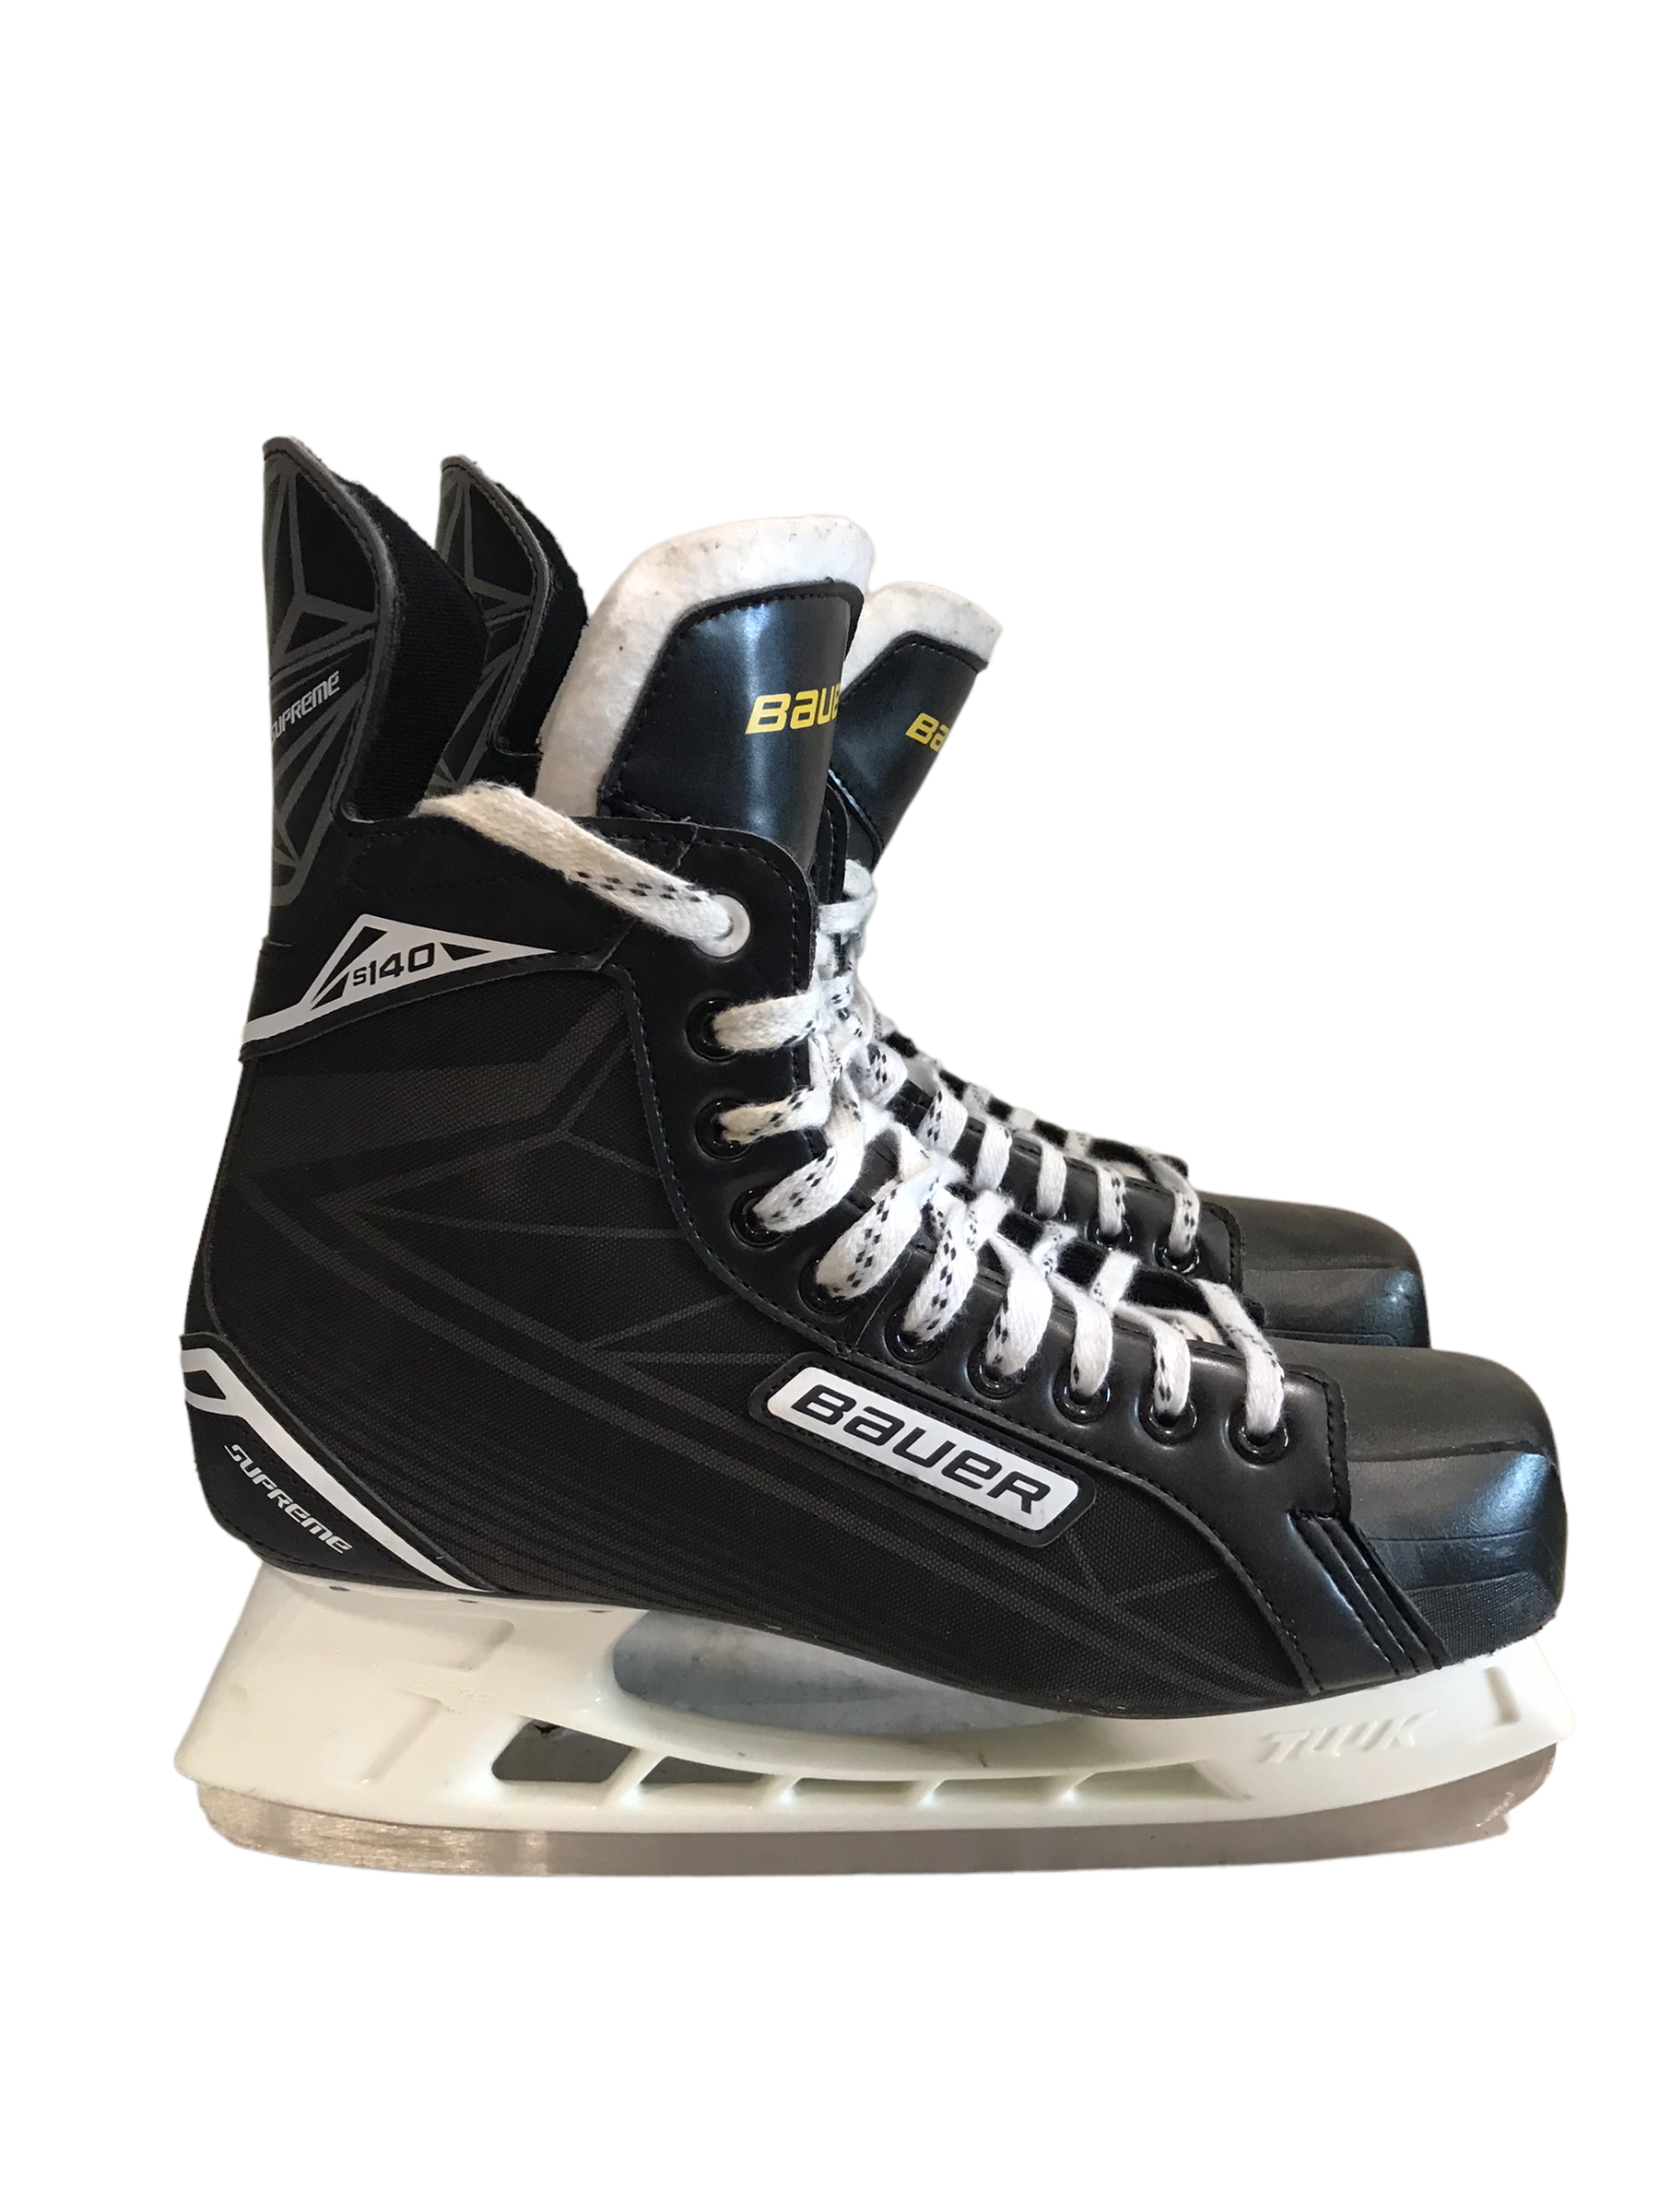 Used Bauer SUPREME S140 Senior 11 Ice Hockey Skates Ice Hockey Skates